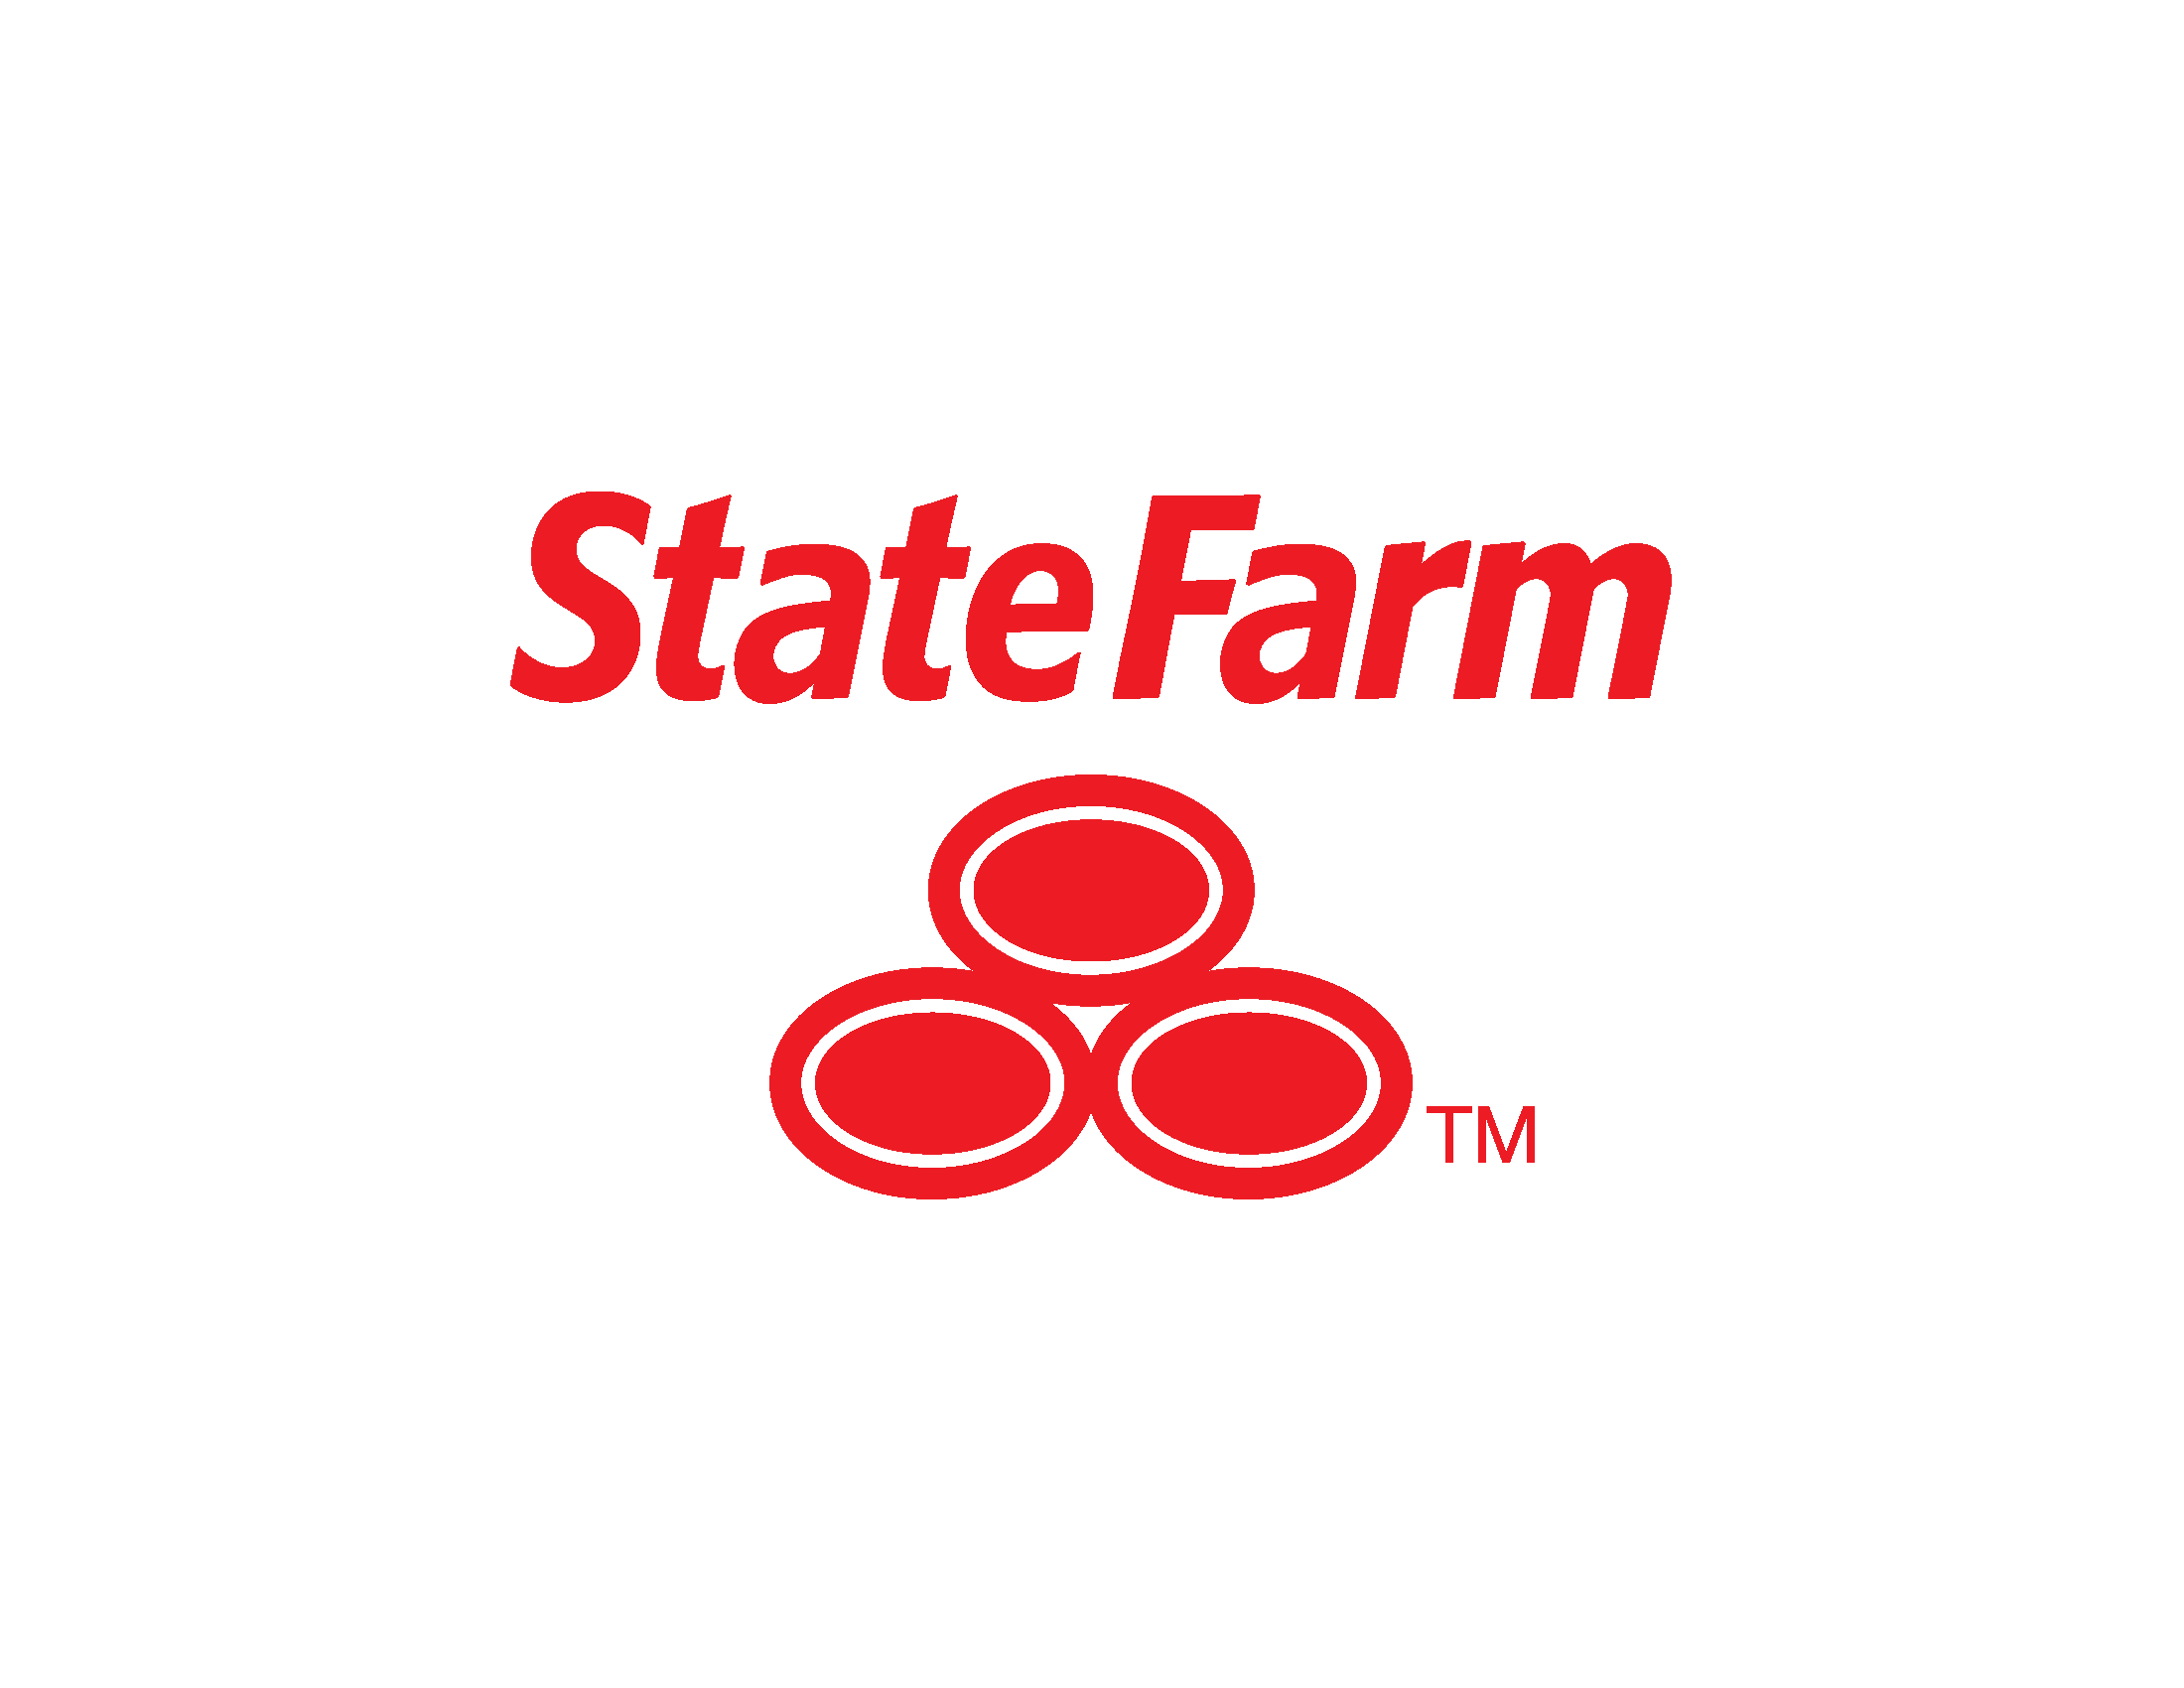 State Farm Logo Image Affordable Car Insurance